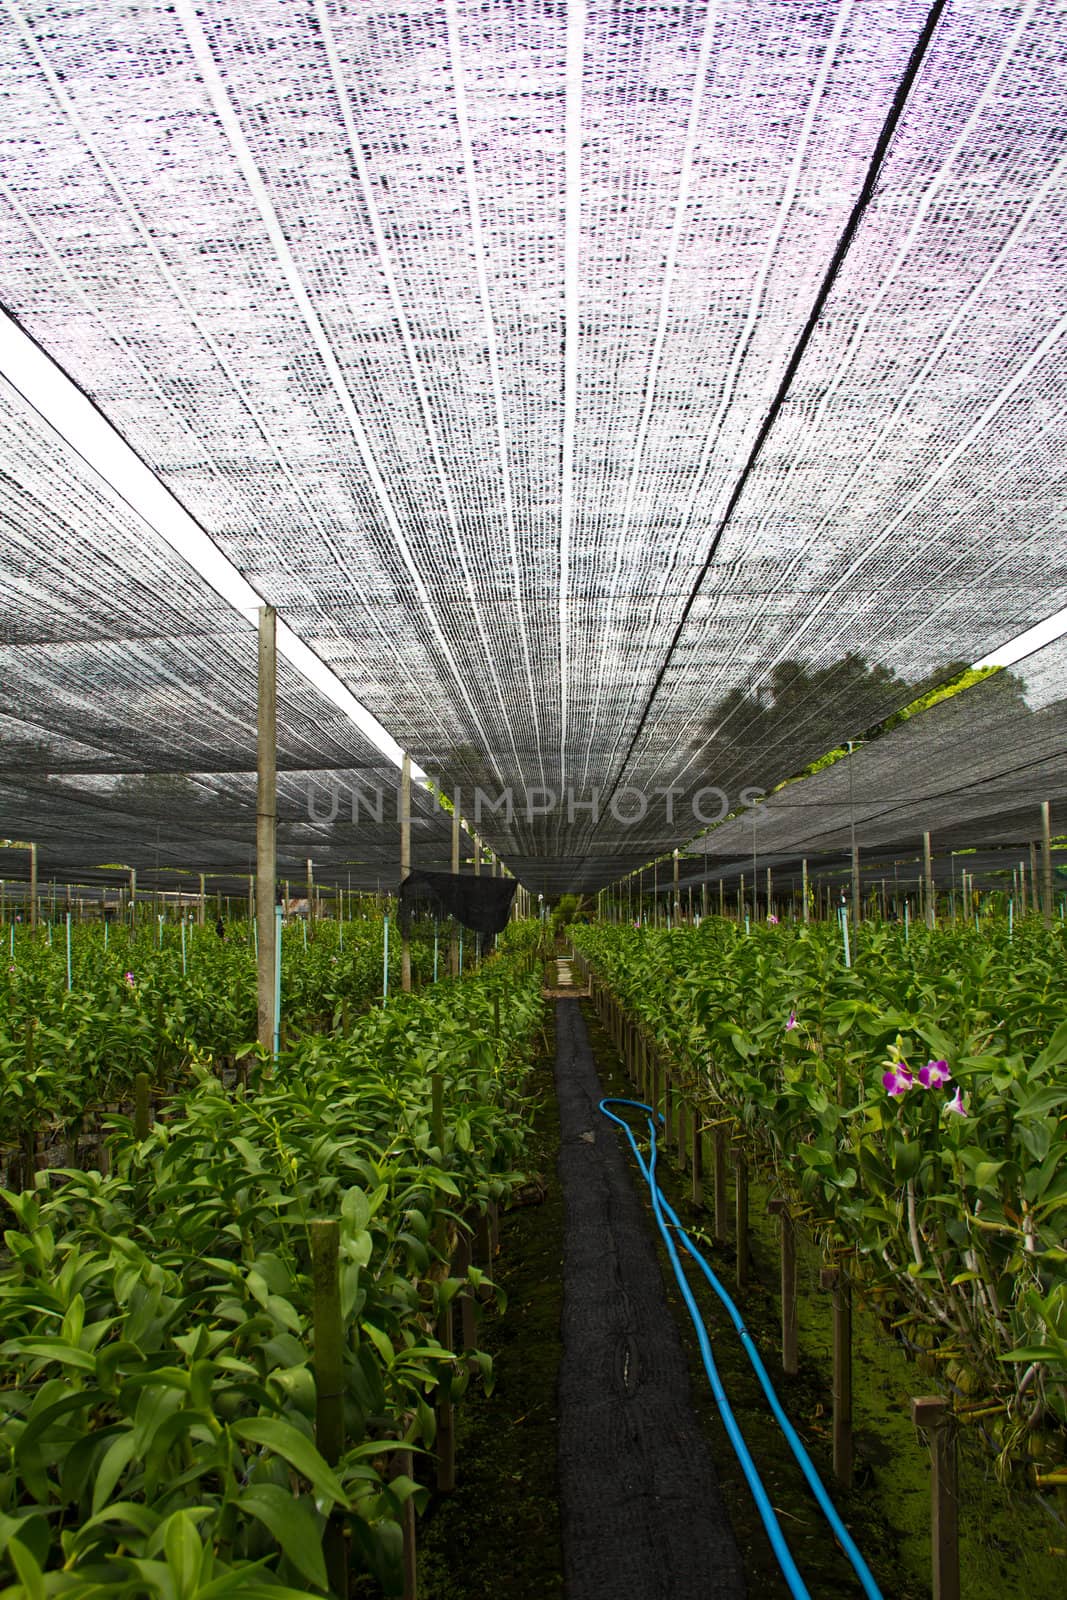 orchid farm by stockjiggo